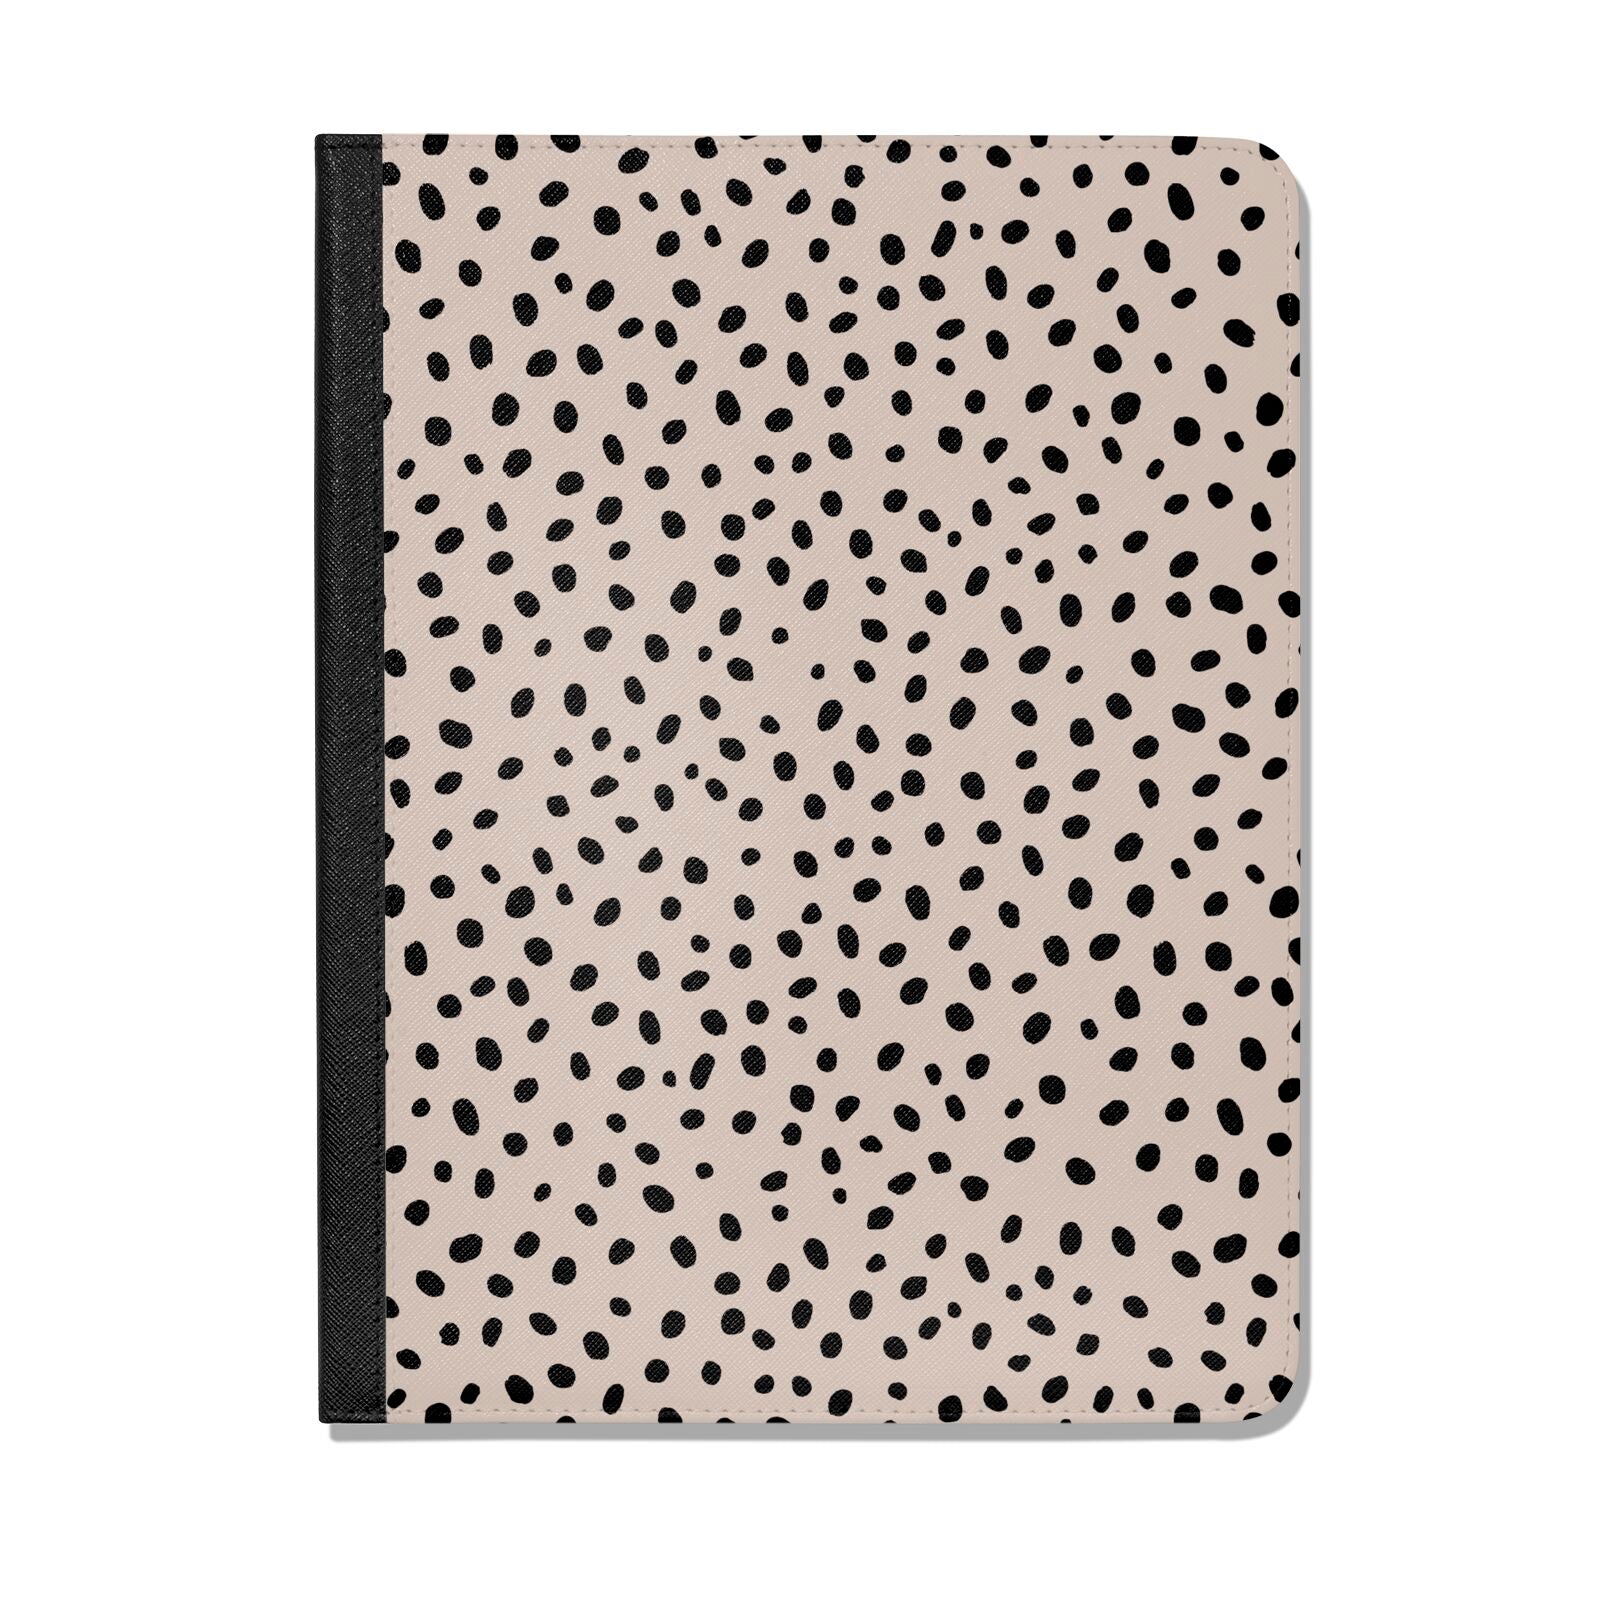 Almond Polka Dot Apple iPad Leather Folio Case